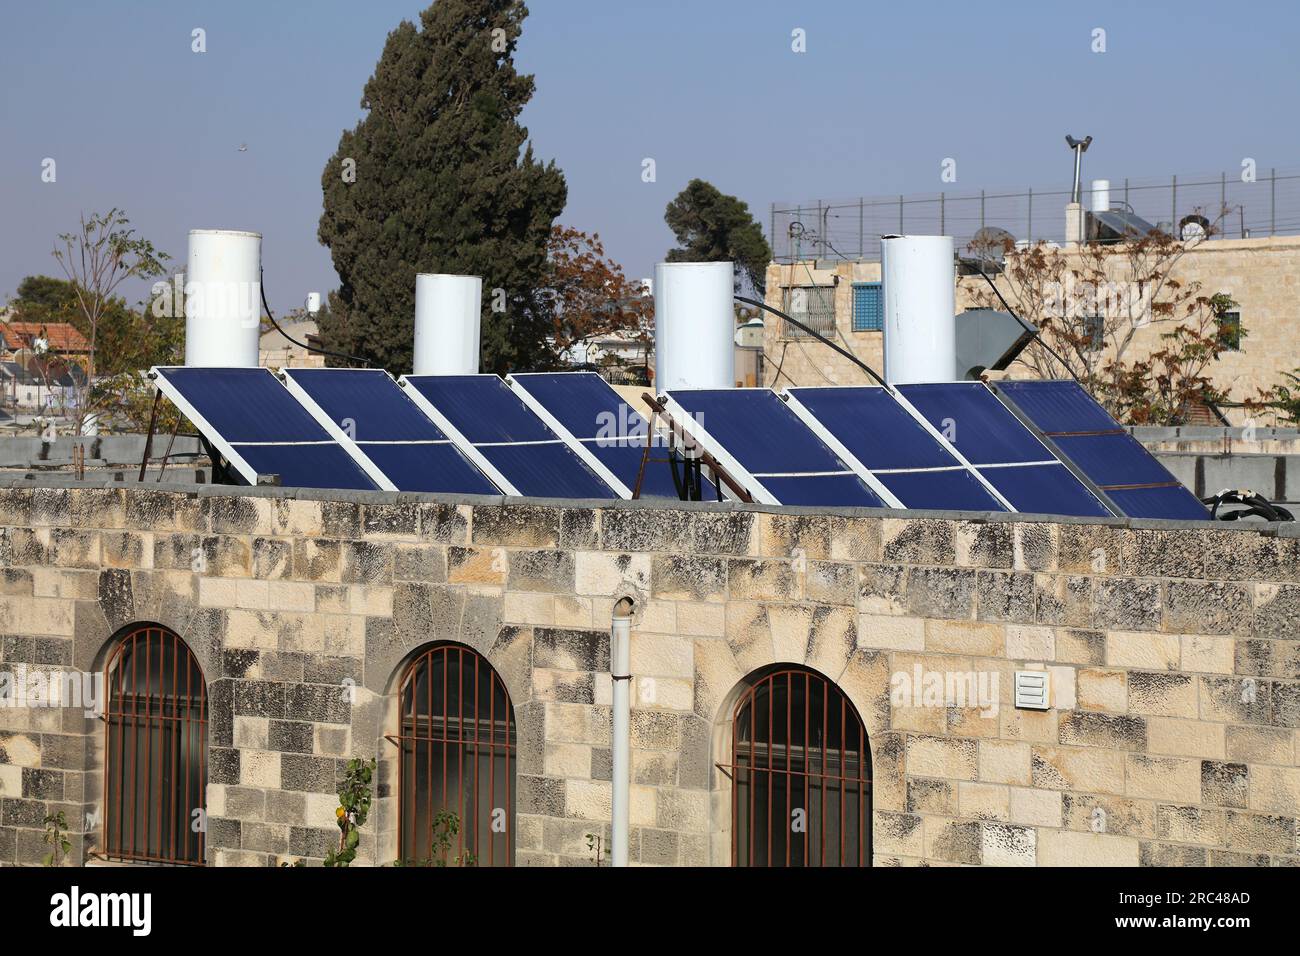 Solarbetriebene Dachheizgeräte in Jerusalem, Israel. Stockfoto